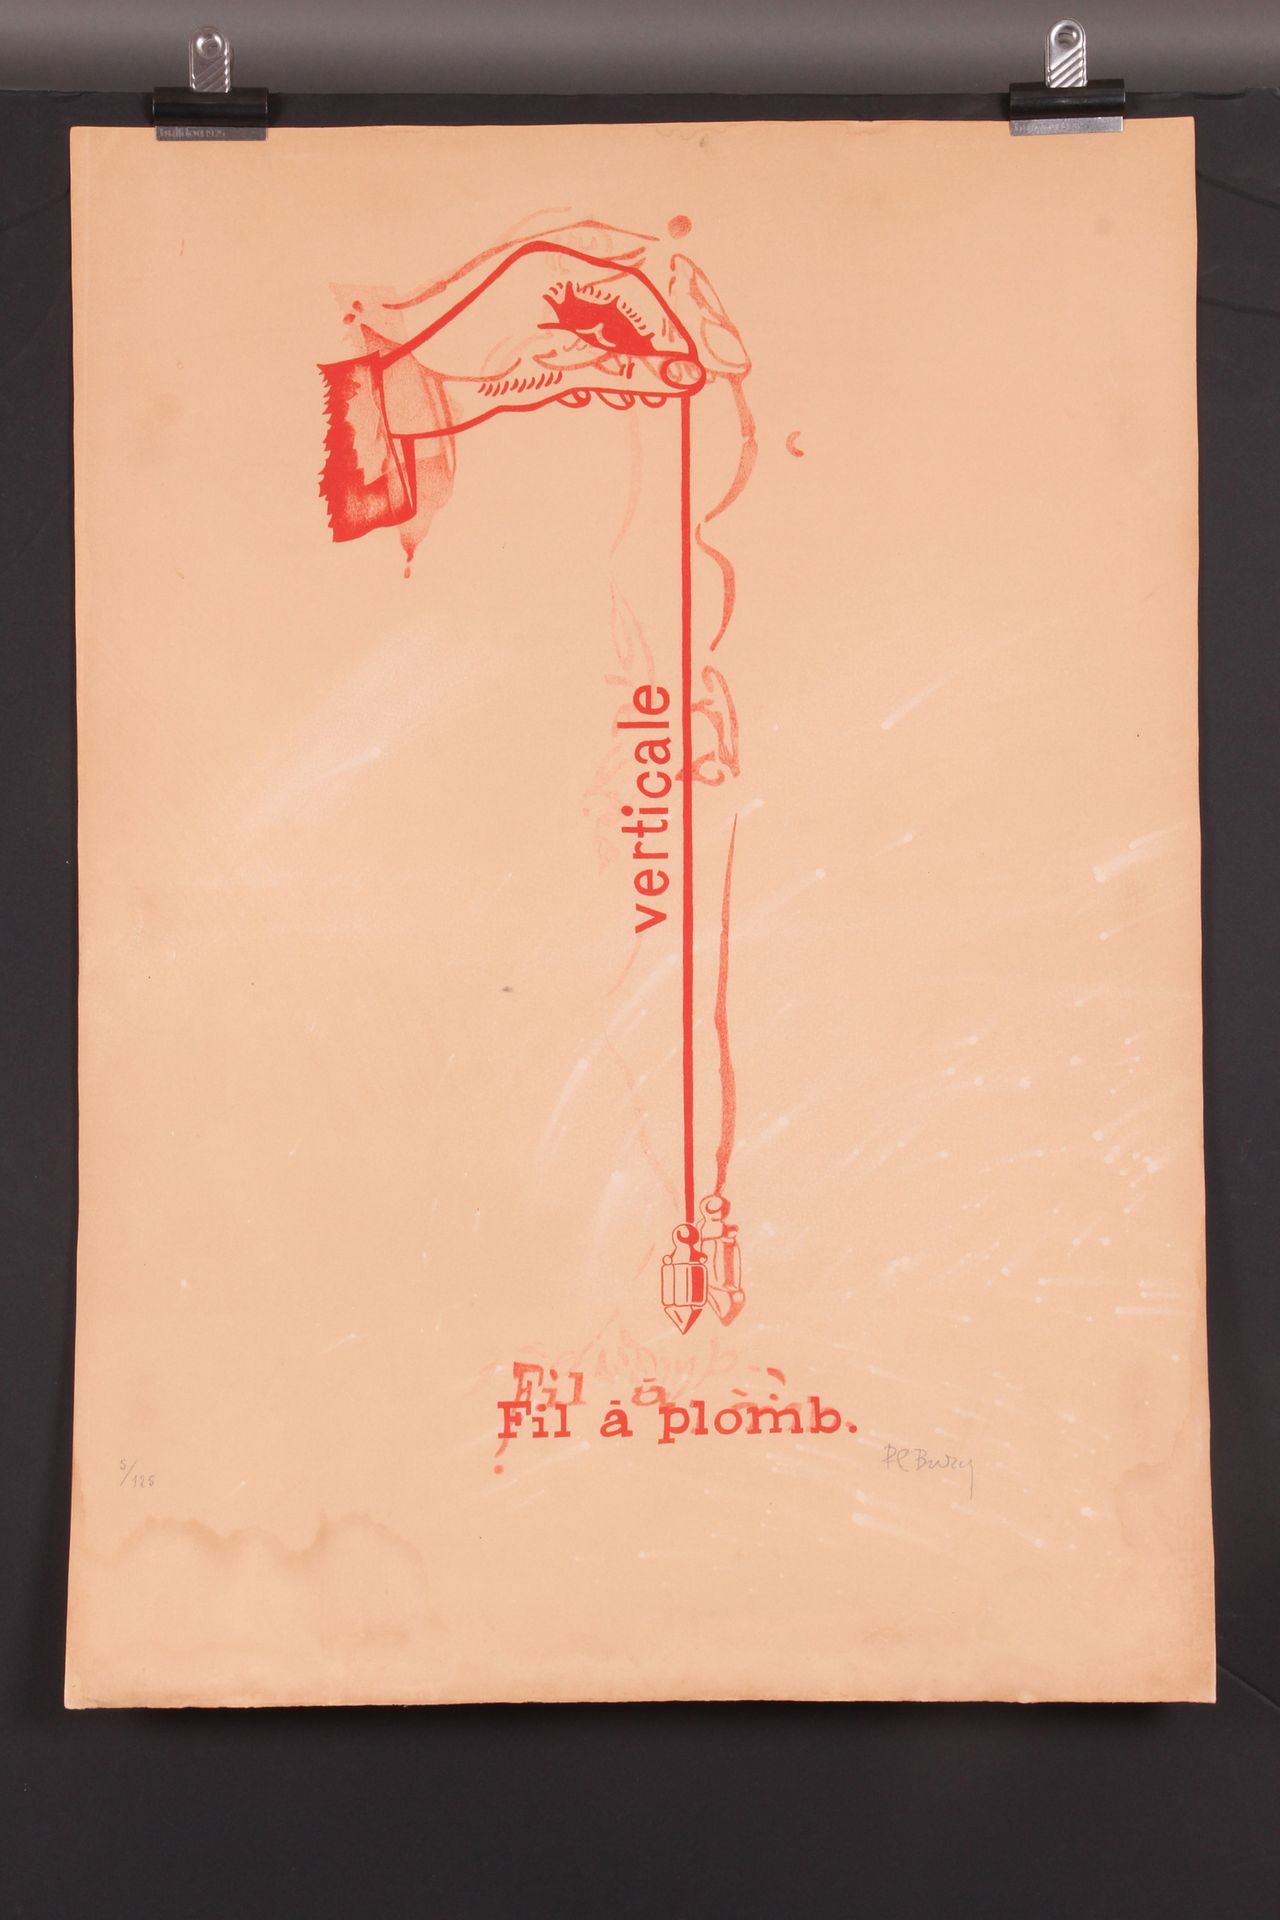 Pol BURY. "铅锤 "彩色石版画，55 x 50。下方有铅笔签名和对齐（5/125）。日晒纸，下缘有湿迹。